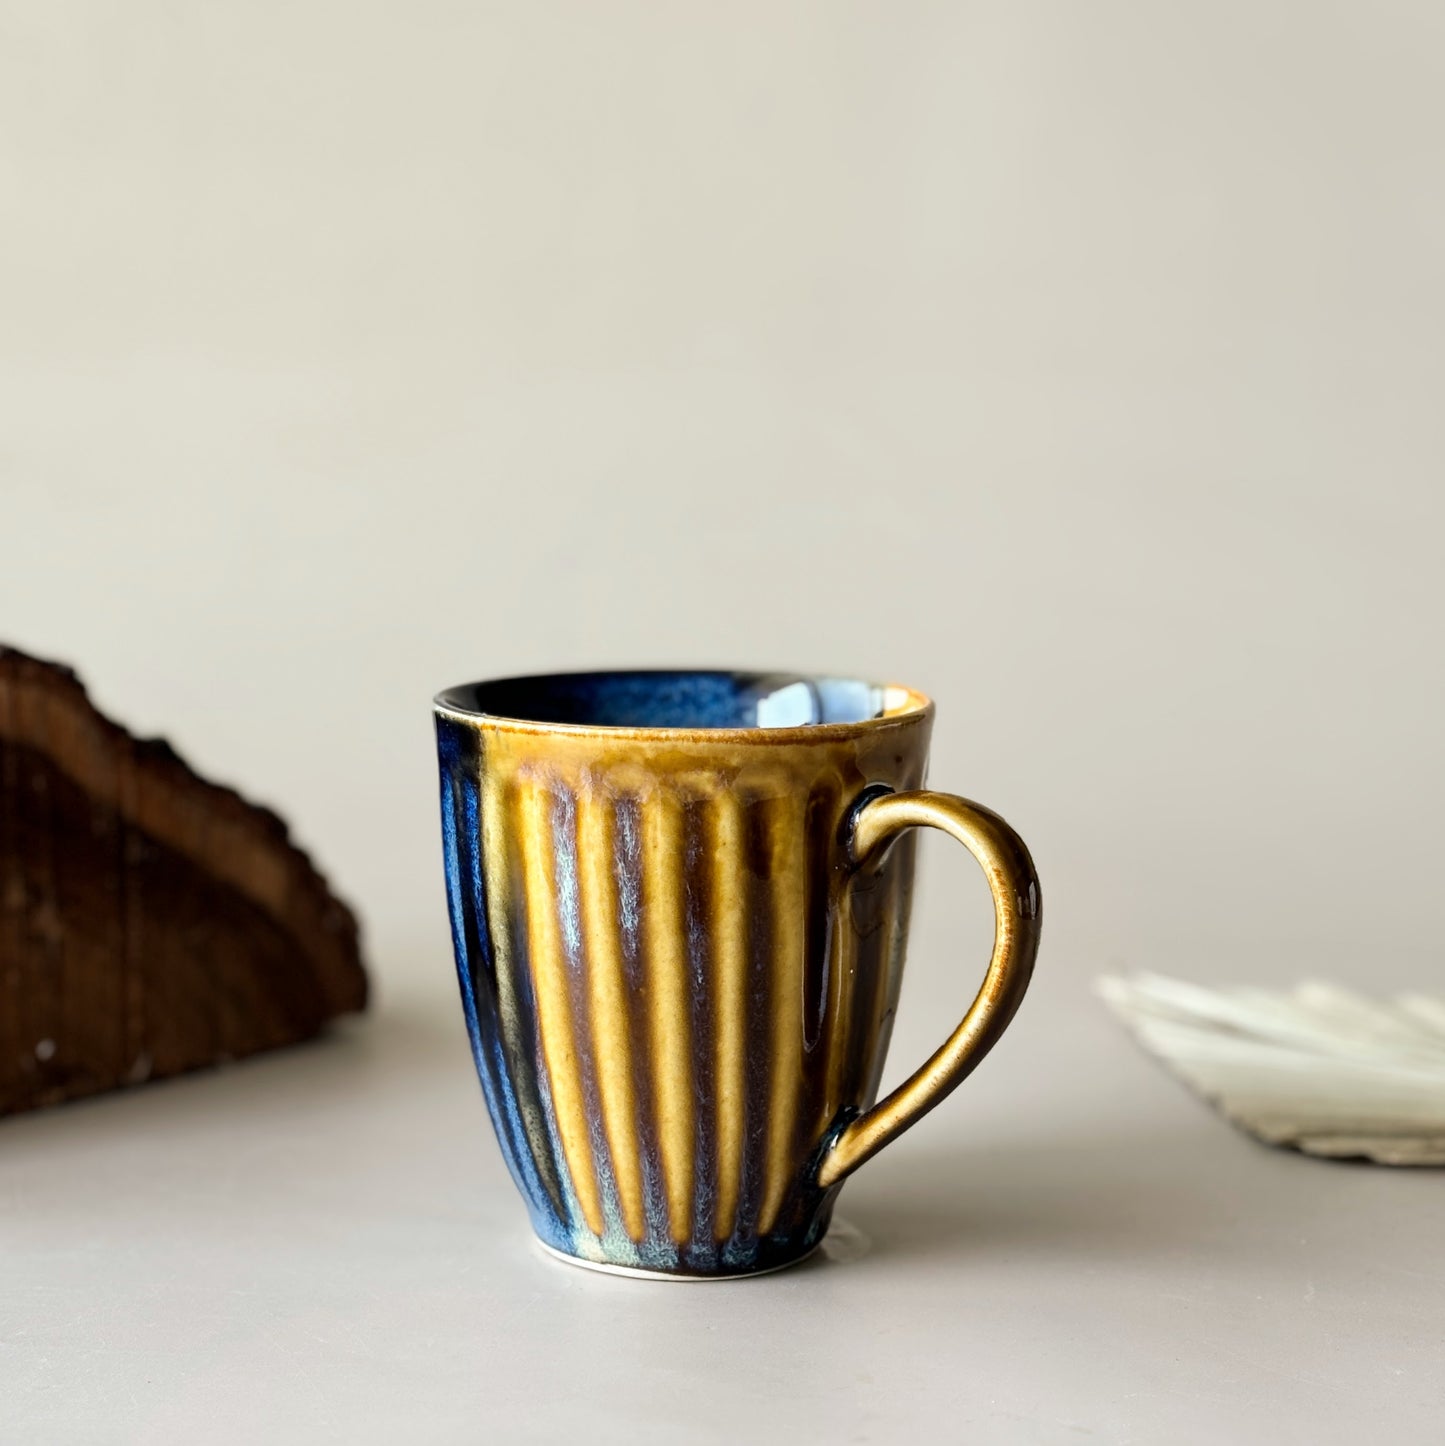 The Mustard Blue Coffee Mug